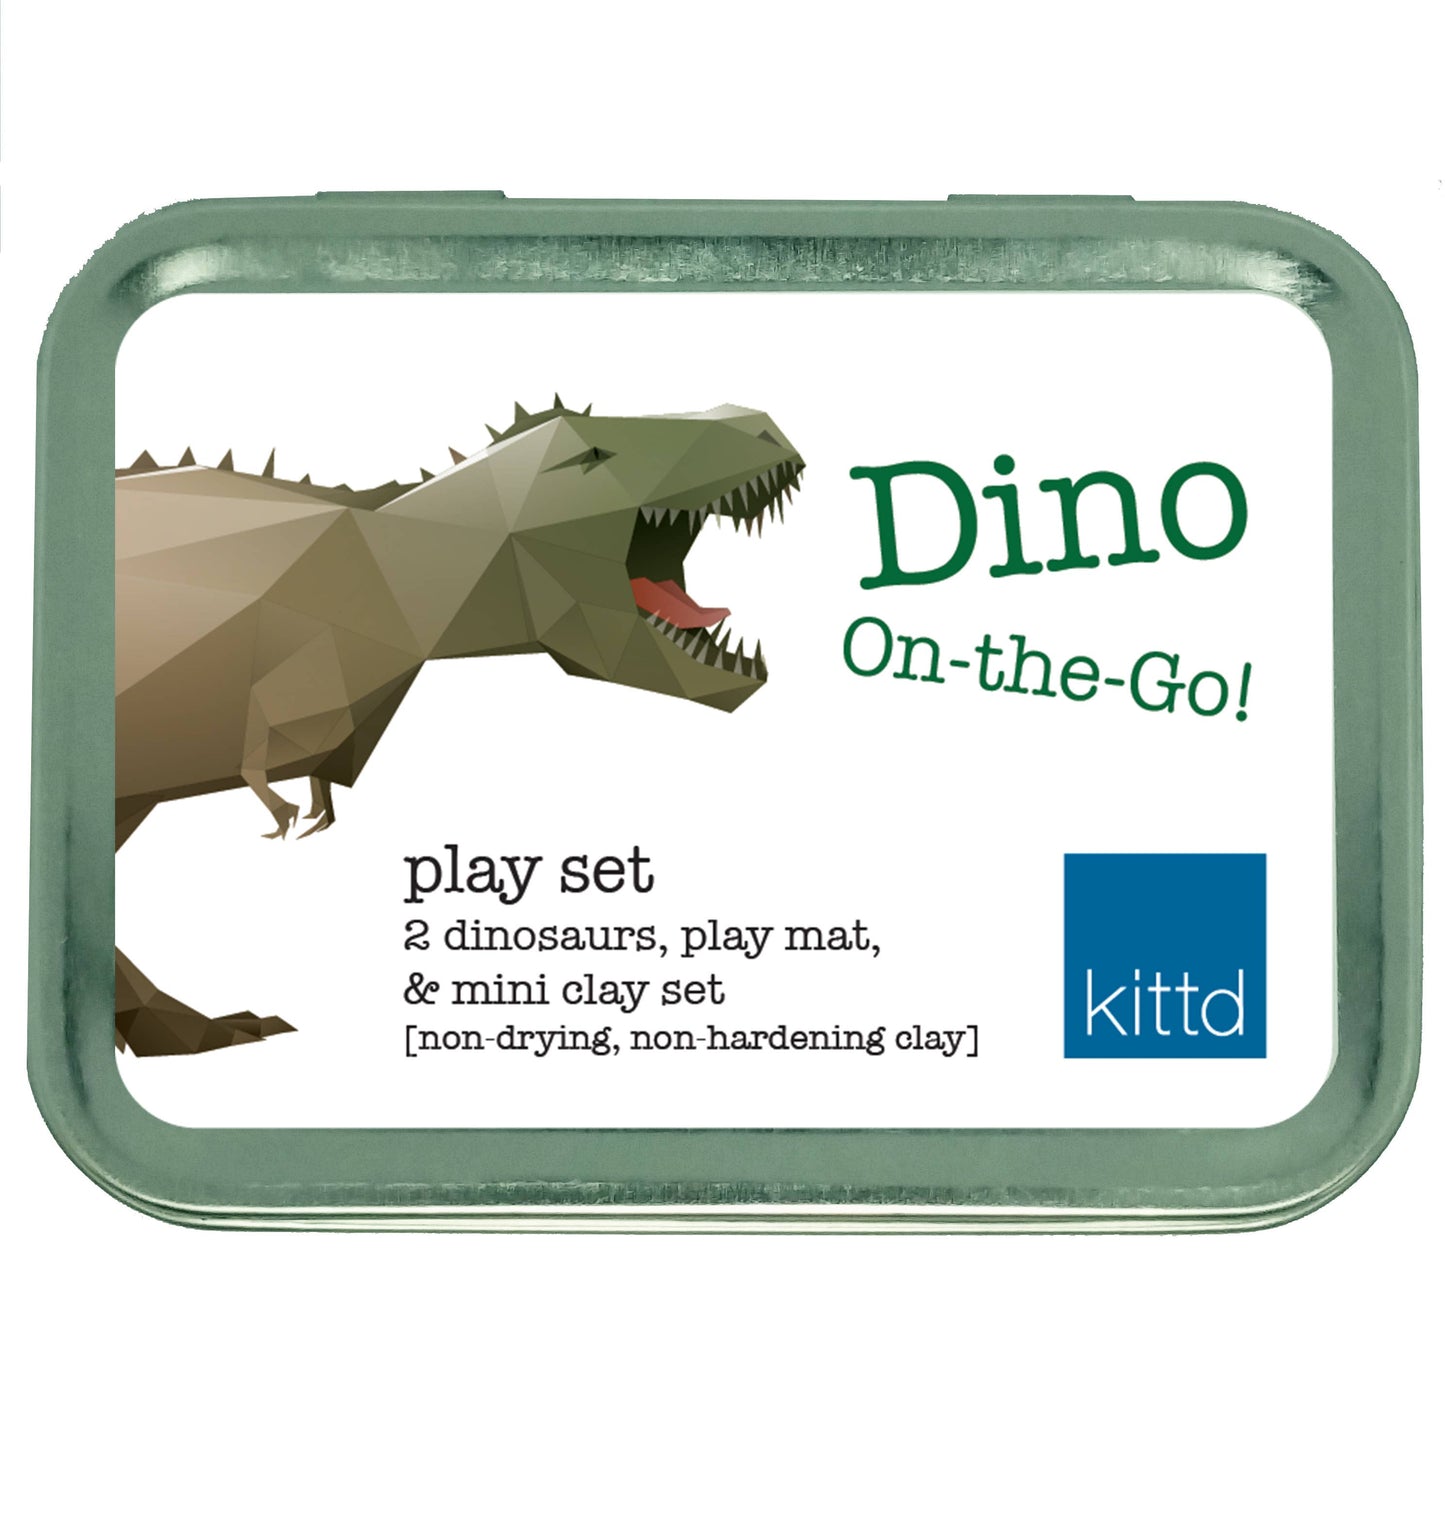 Dino On-the-Go Kids Clay Play Set